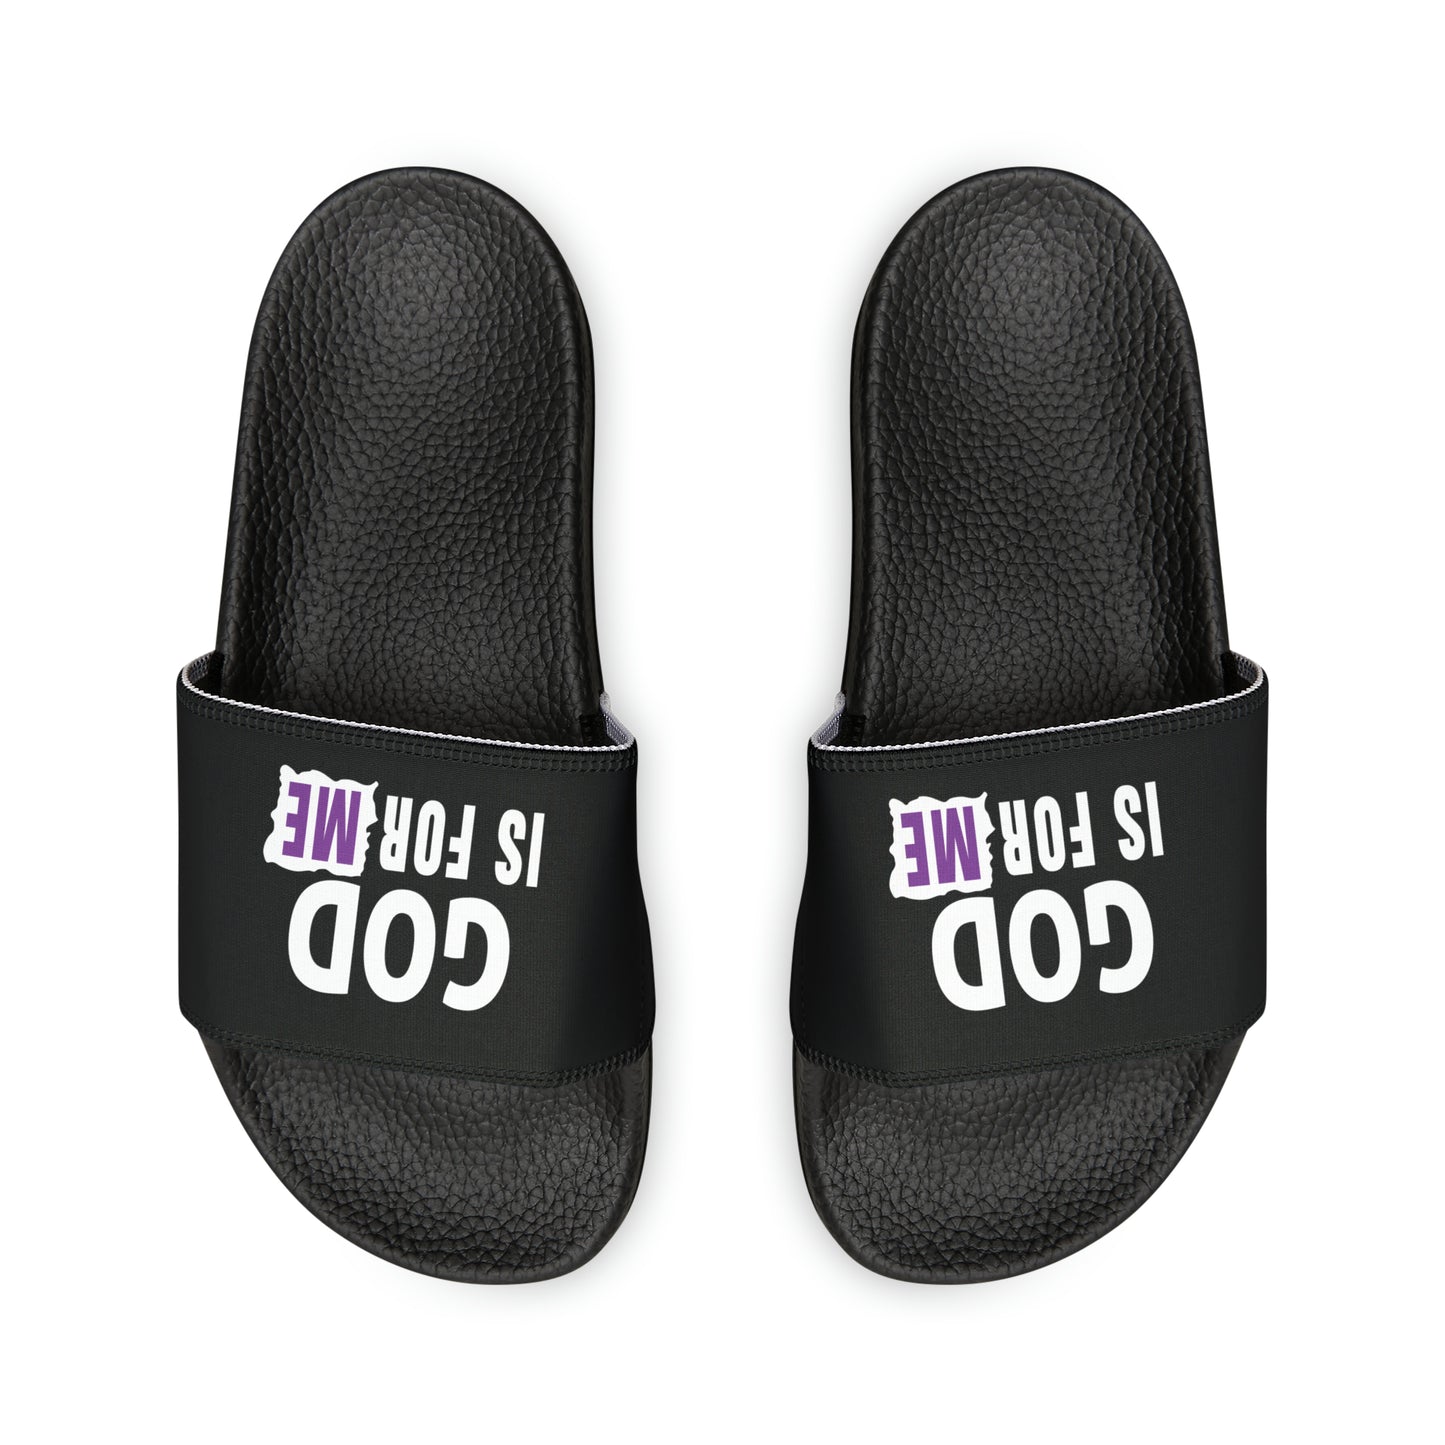 God Is For Me Men's PU Christian Slide Sandals Printify